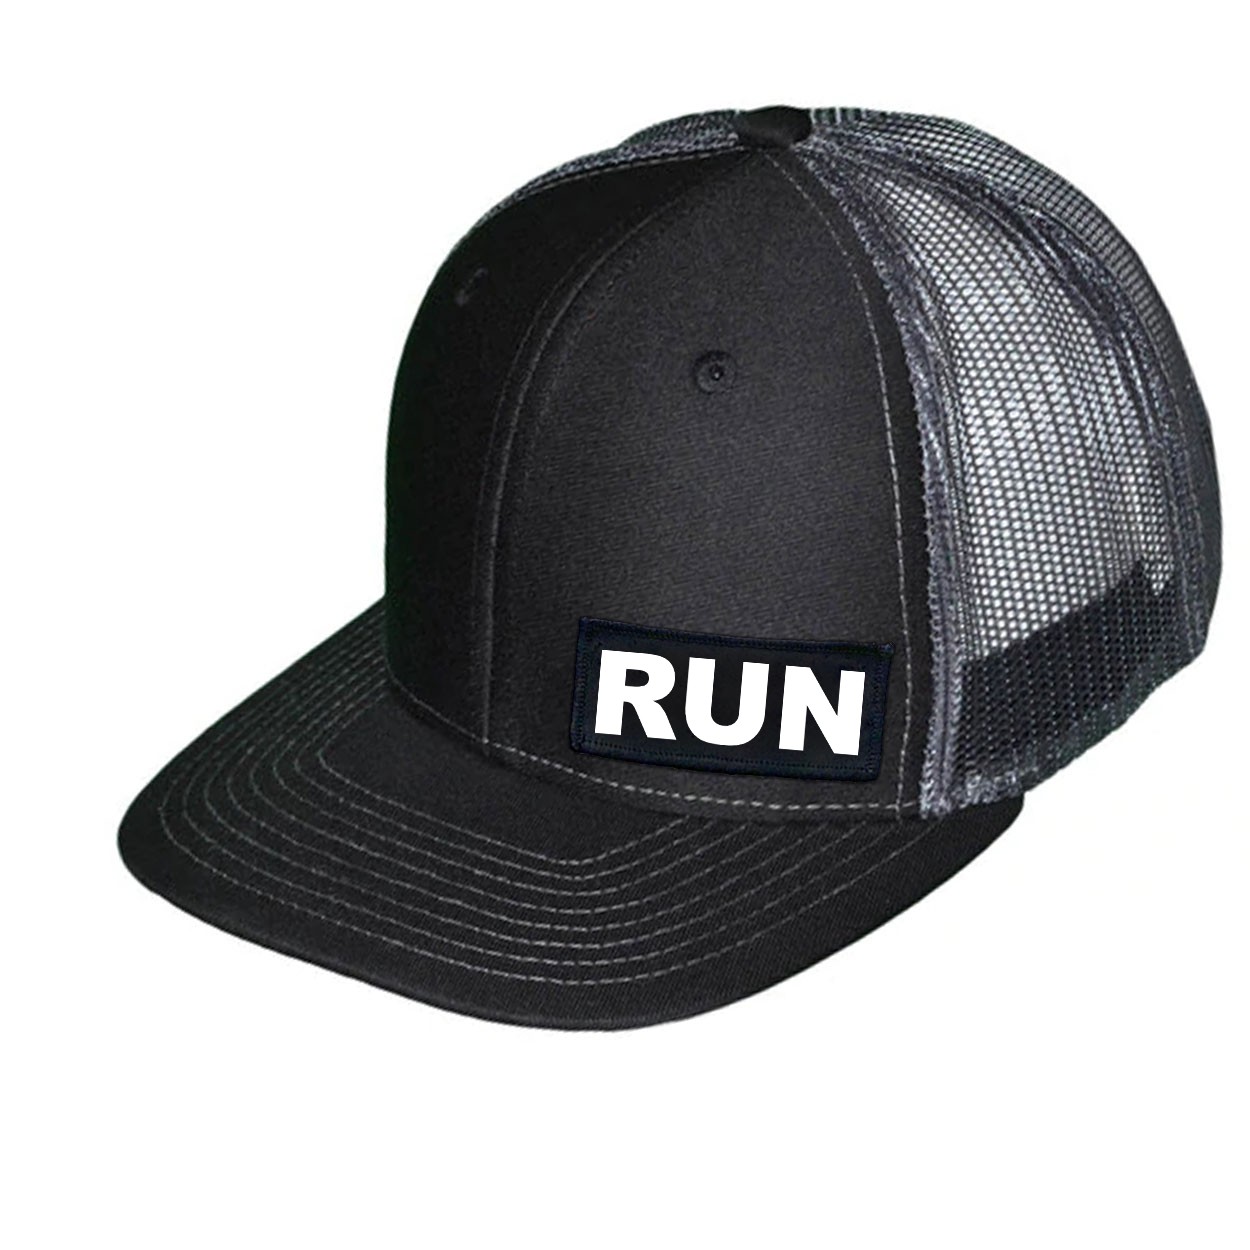 Run Brand Logo Night Out Woven Patch Snapback Trucker Hat Black/Dark Gray (White Logo)